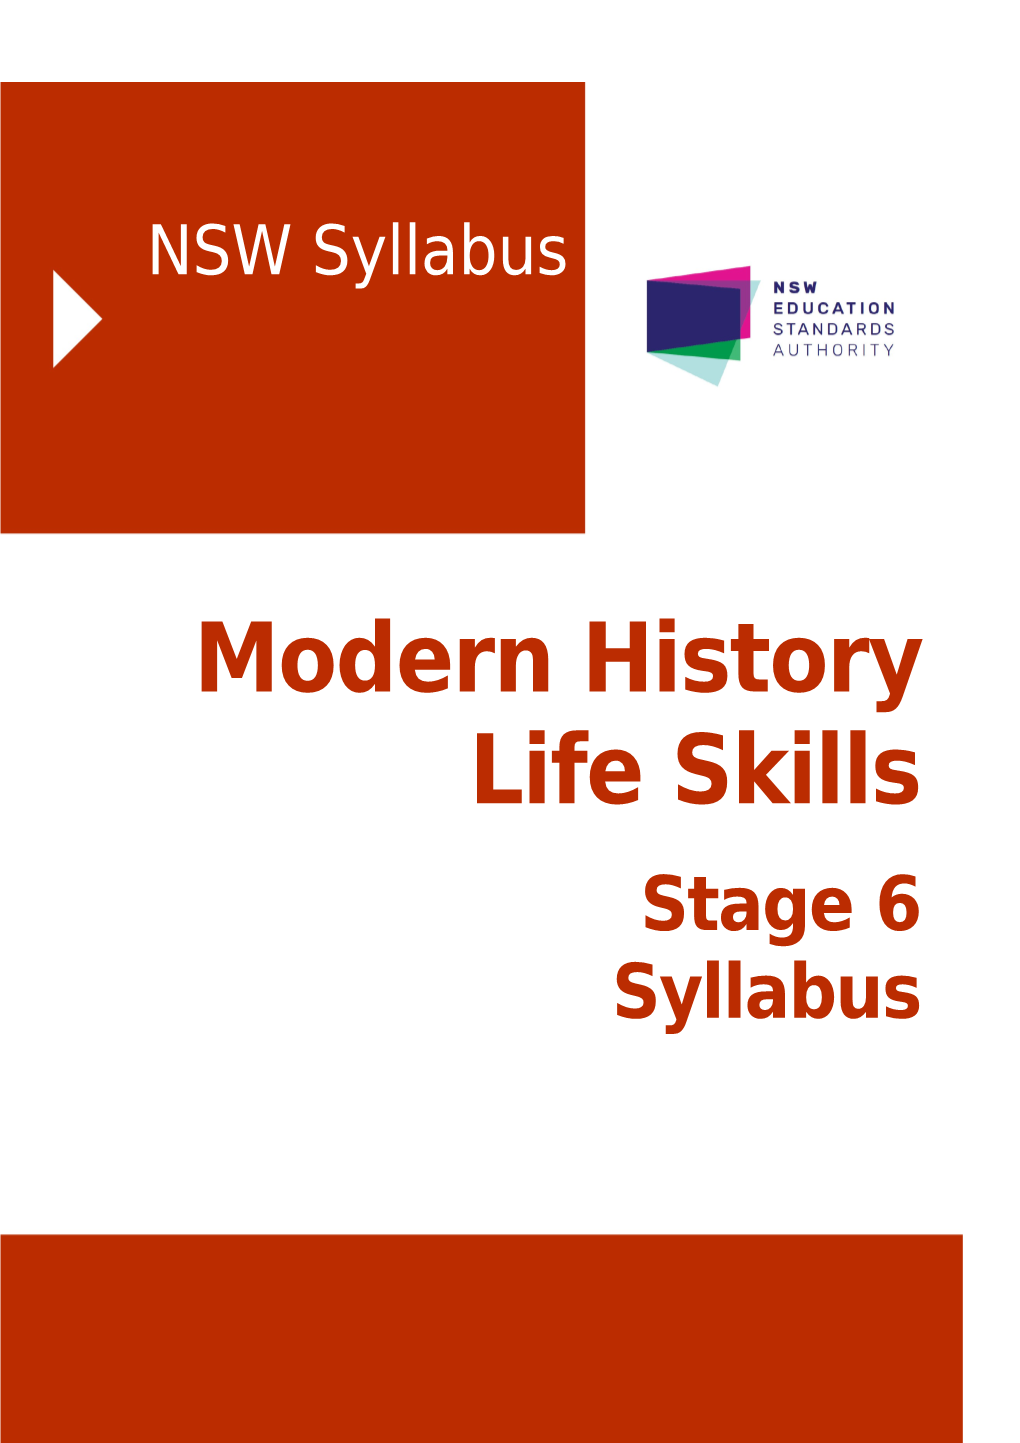 Modern History Life Skills Stage 6 Syllabus 2017